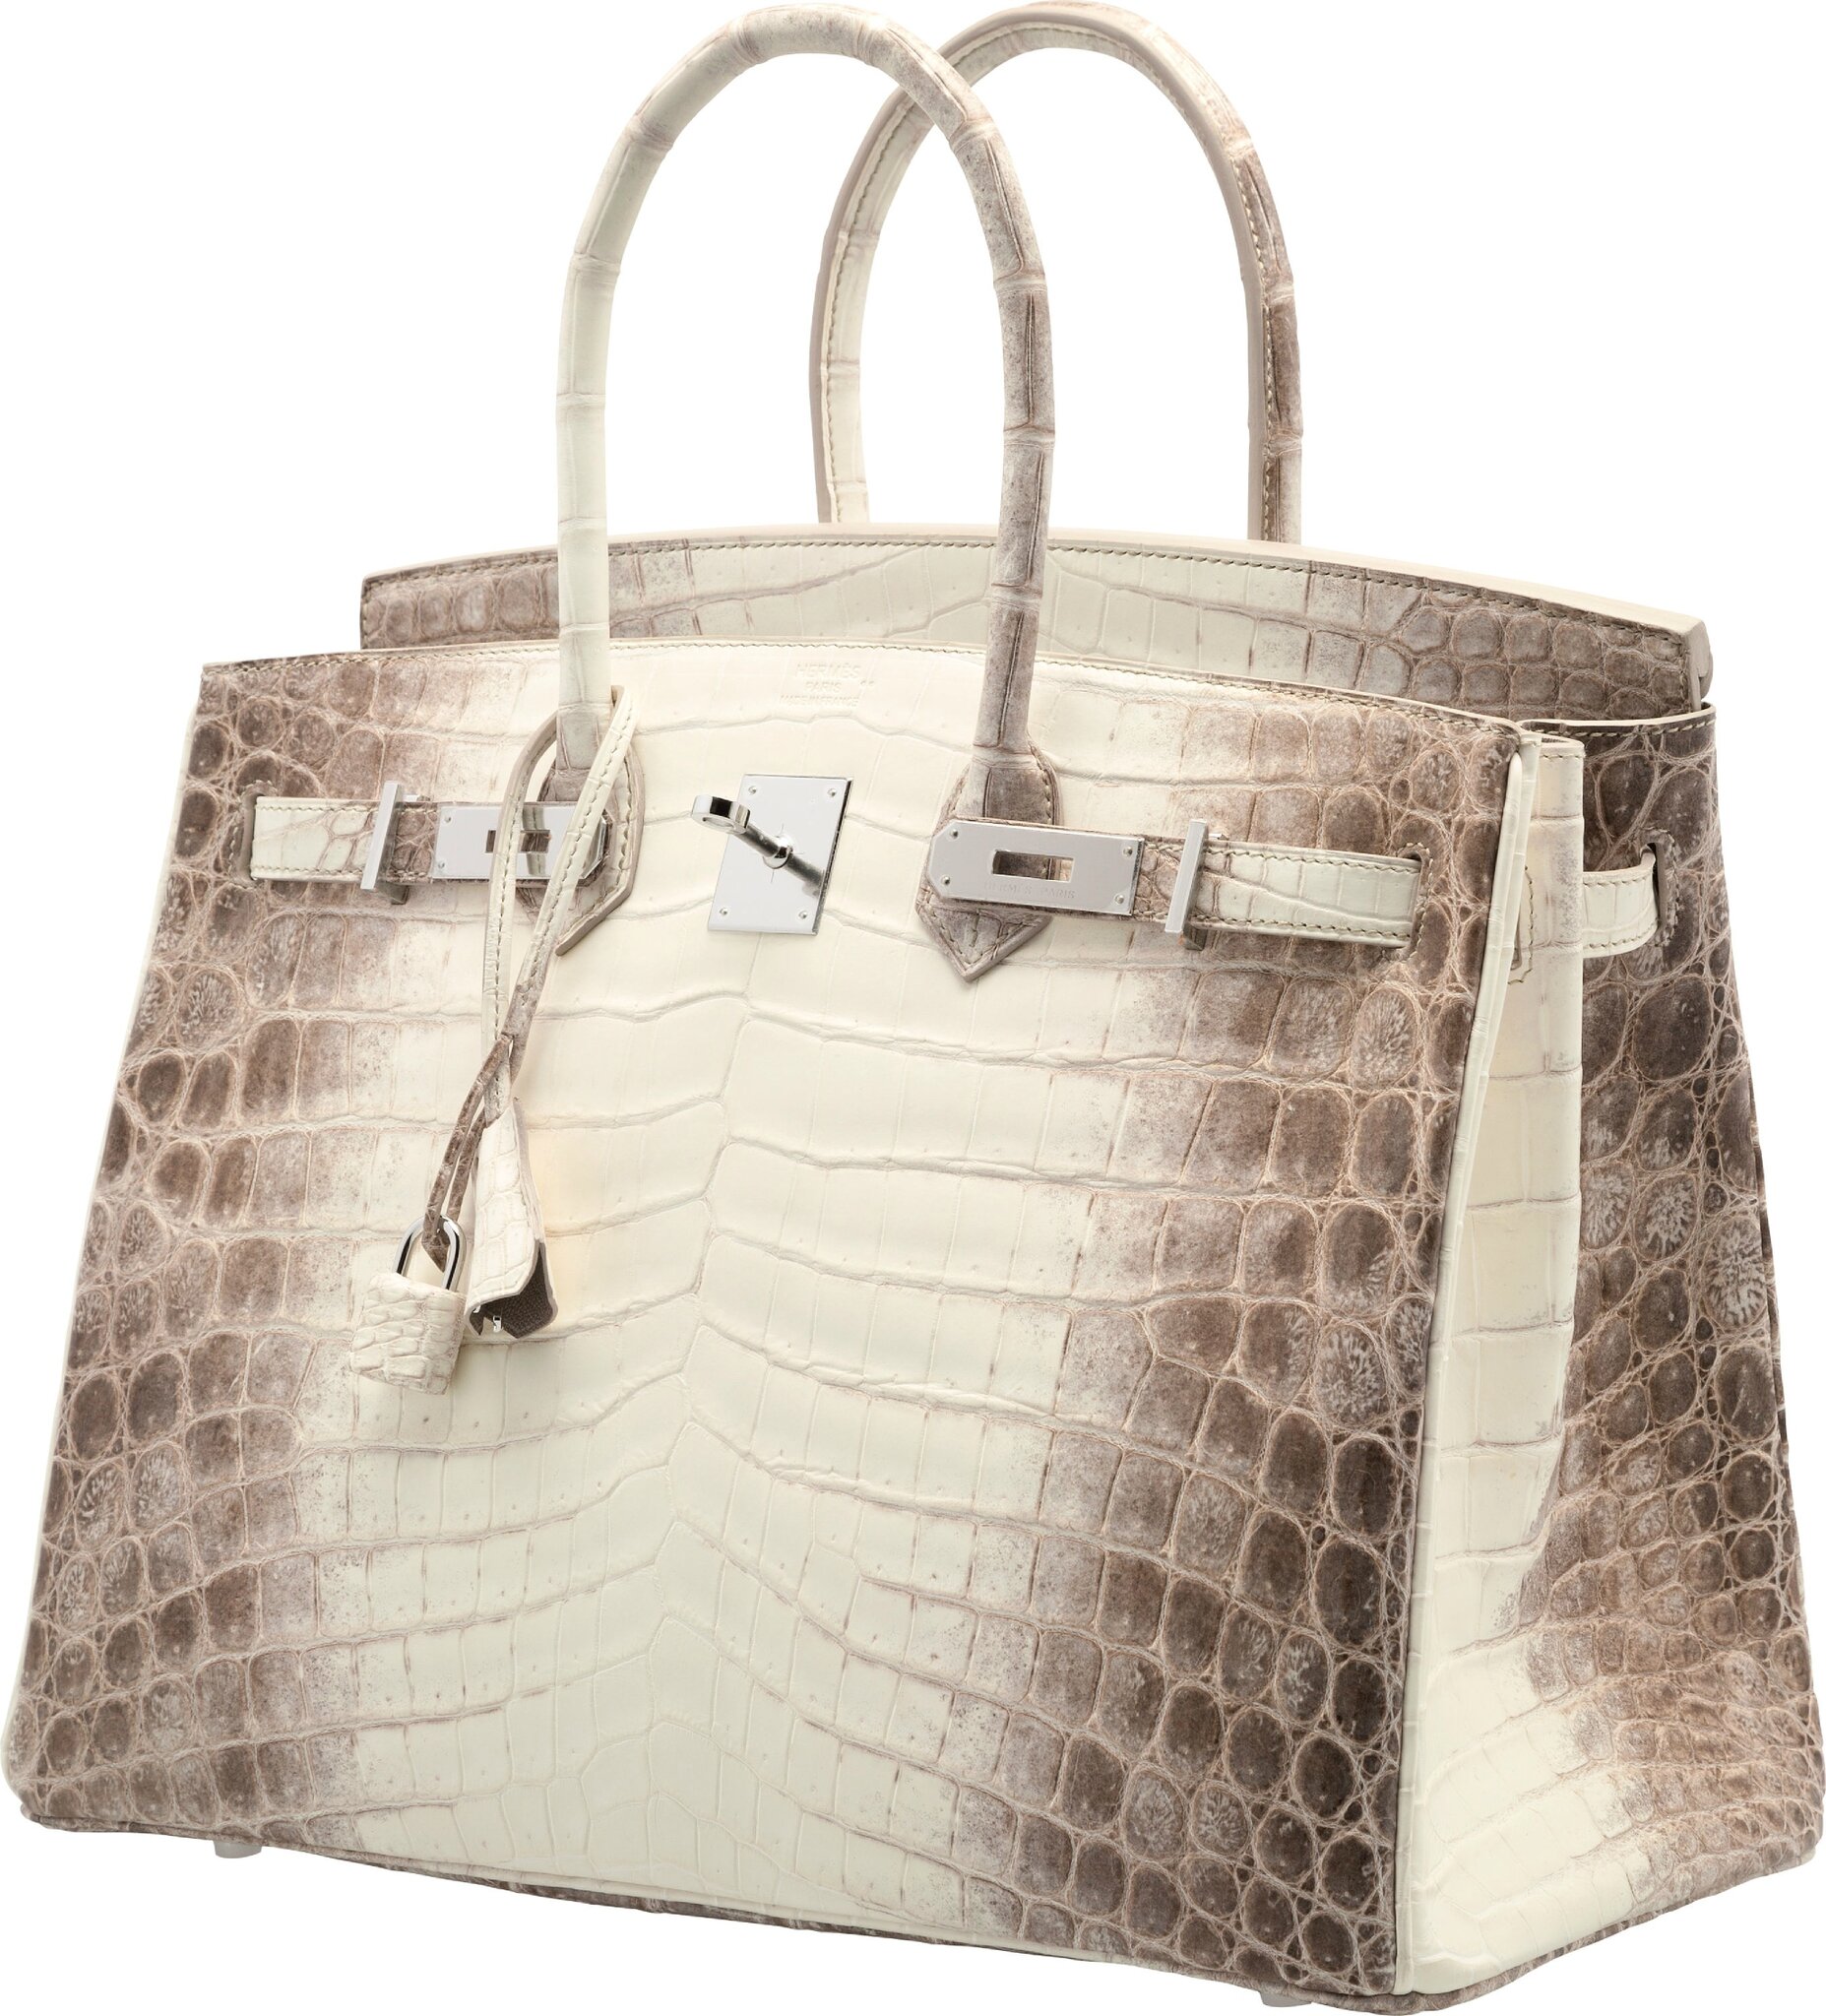 chanel diamond forever handbag